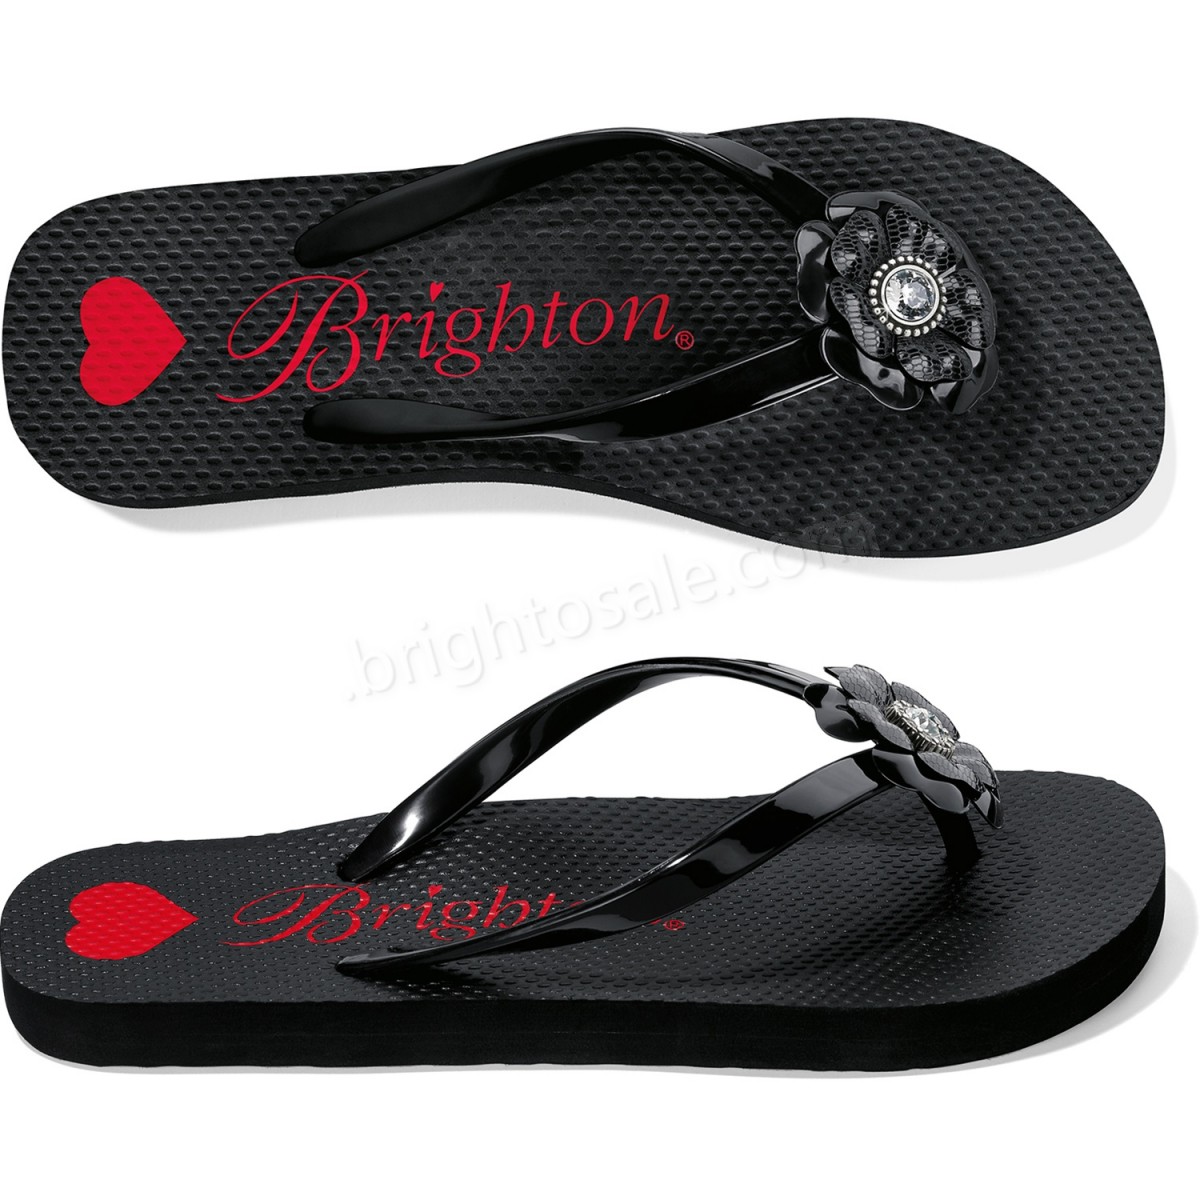 Brighton Collectibles & Online Discount Trento Sandals - -1